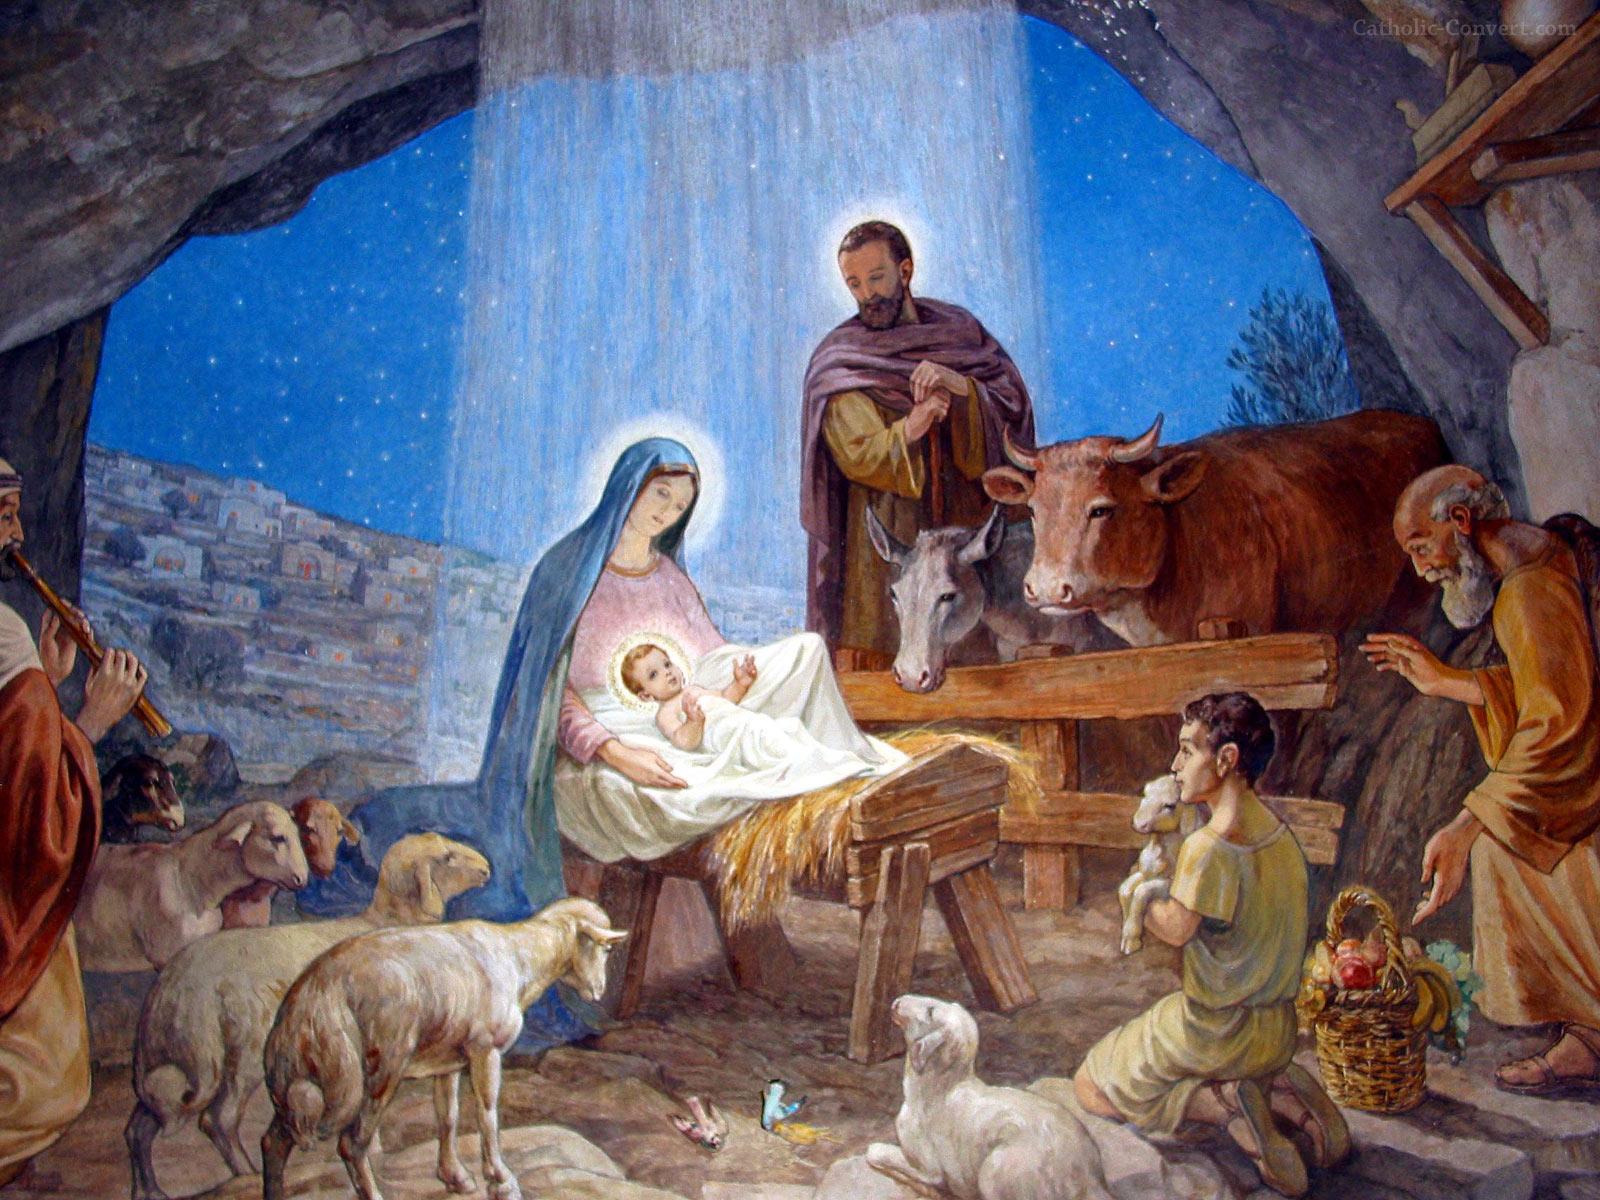 Free Christmas Nativity Wallpaper